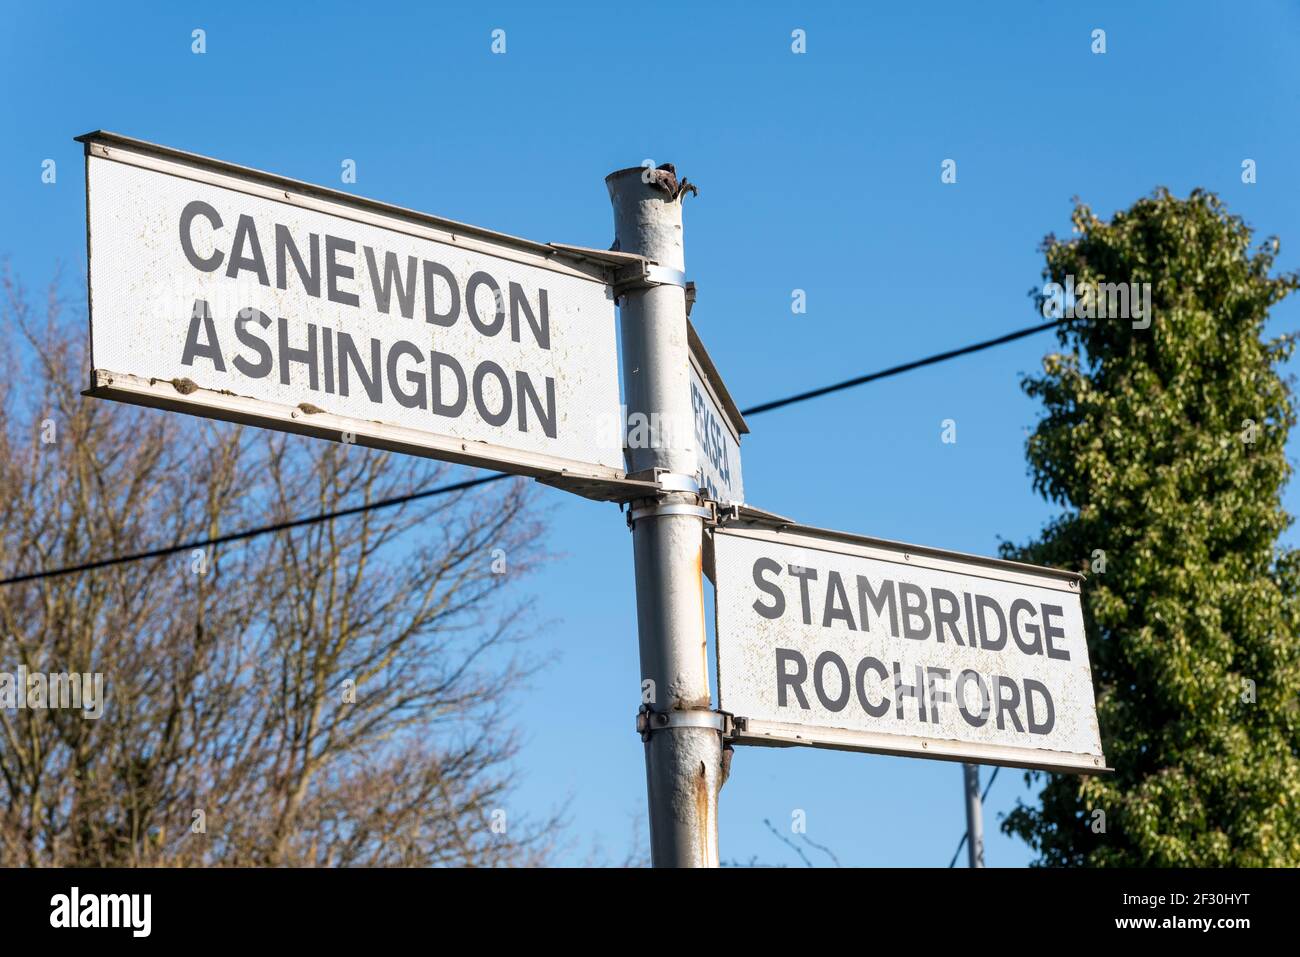 Destination sign in Ballards Gore, near Stambridge, Essex, UK, pointing to Canewdon, Ashingdon, Stambridge and Rochford. Country destinations Stock Photo